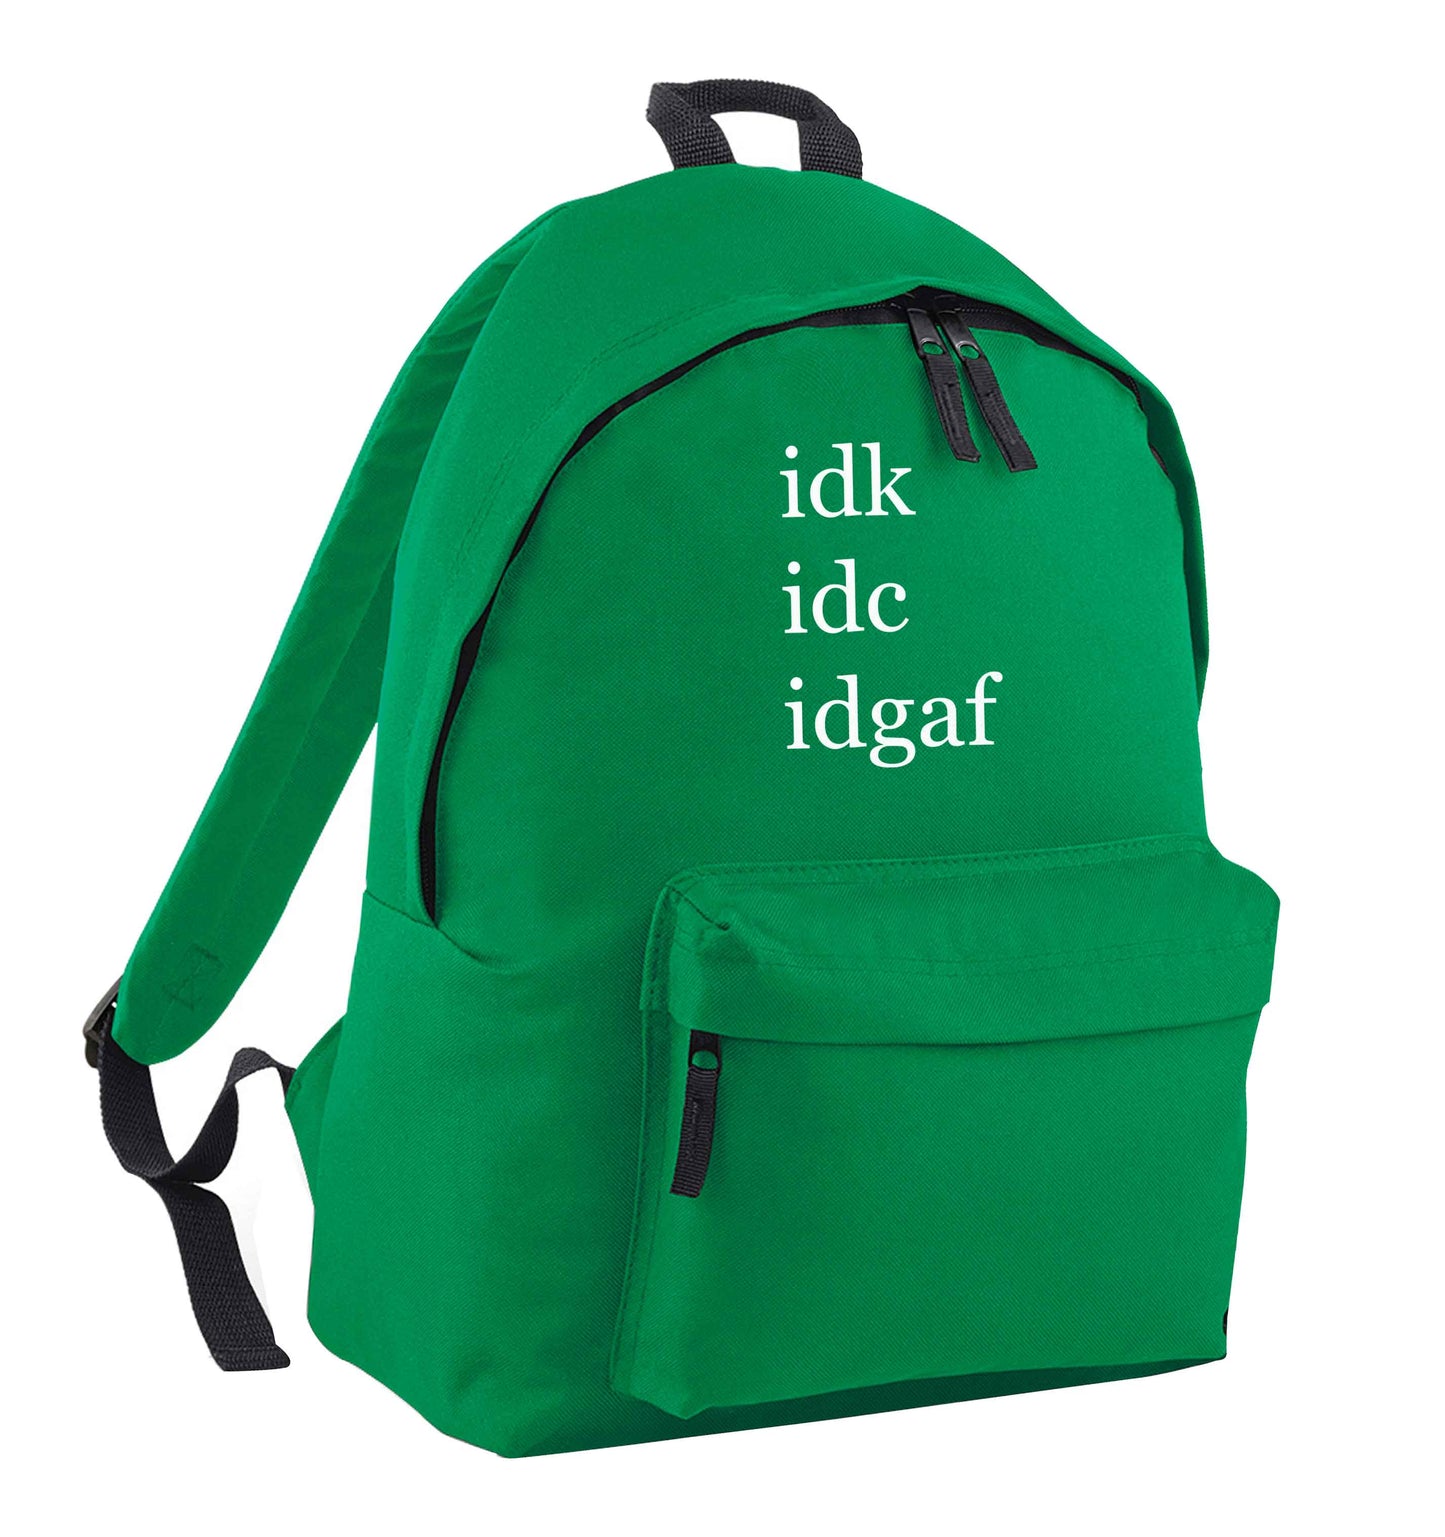 Idk Idc Idgaf green adults backpack